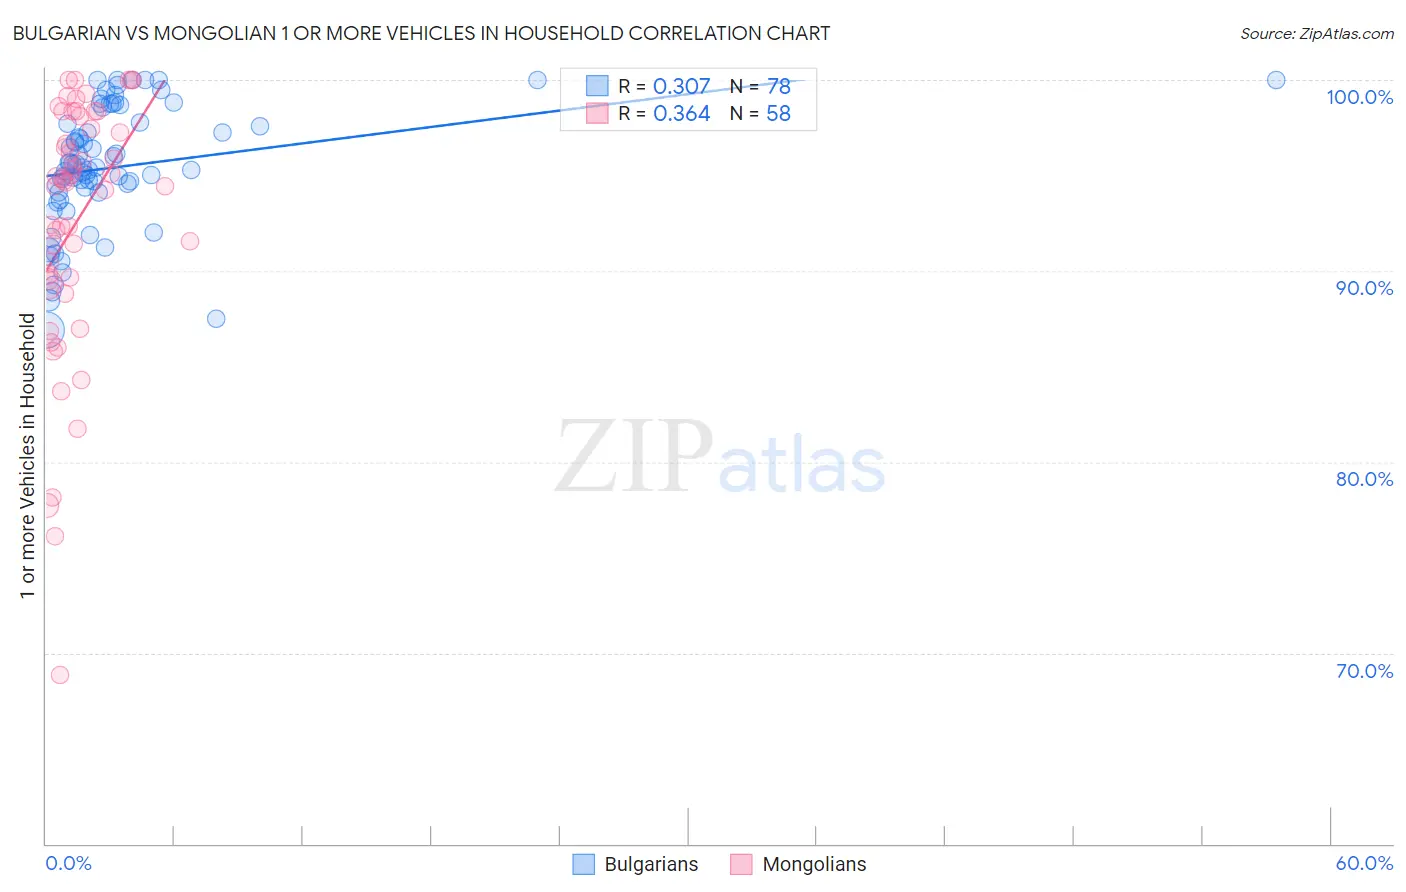 Bulgarian vs Mongolian 1 or more Vehicles in Household